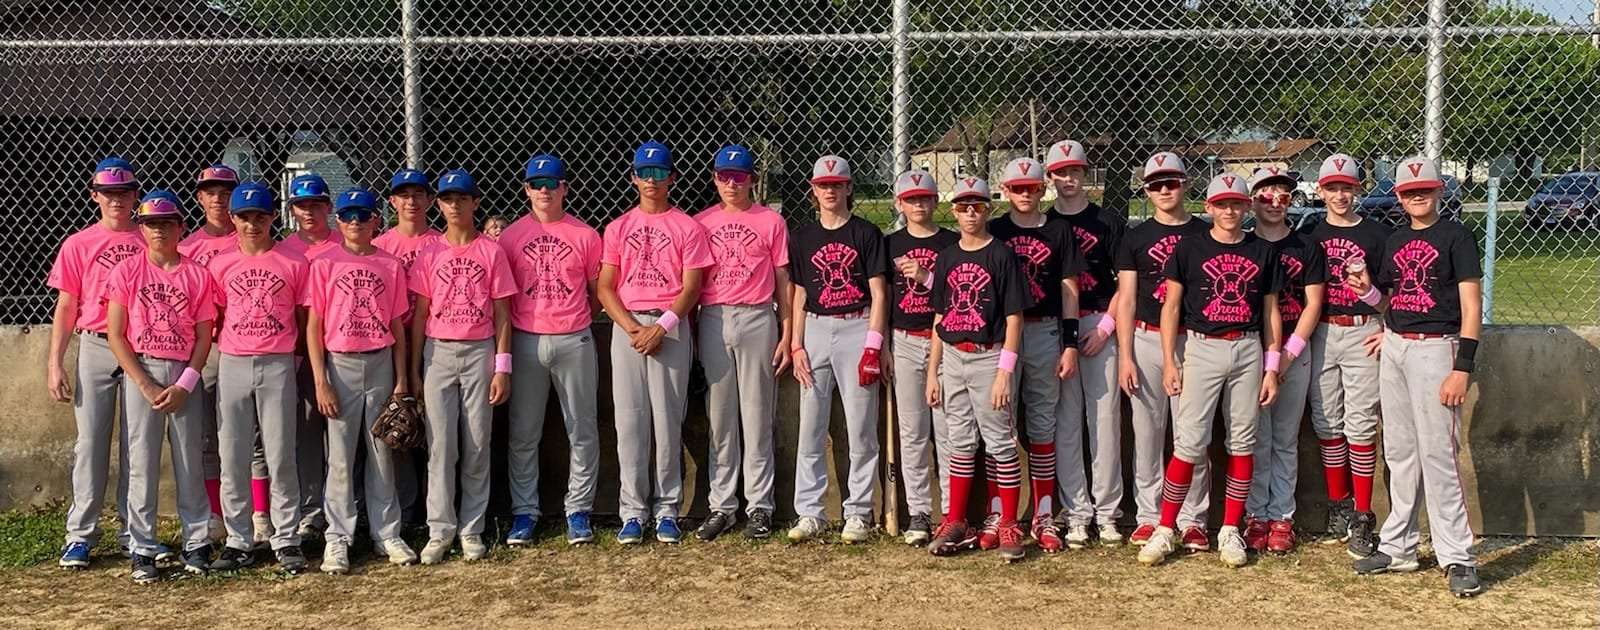 21 teenage boys in pink and black tee shirts, gray baseball pants, cleats, sunglasses, and ball caps